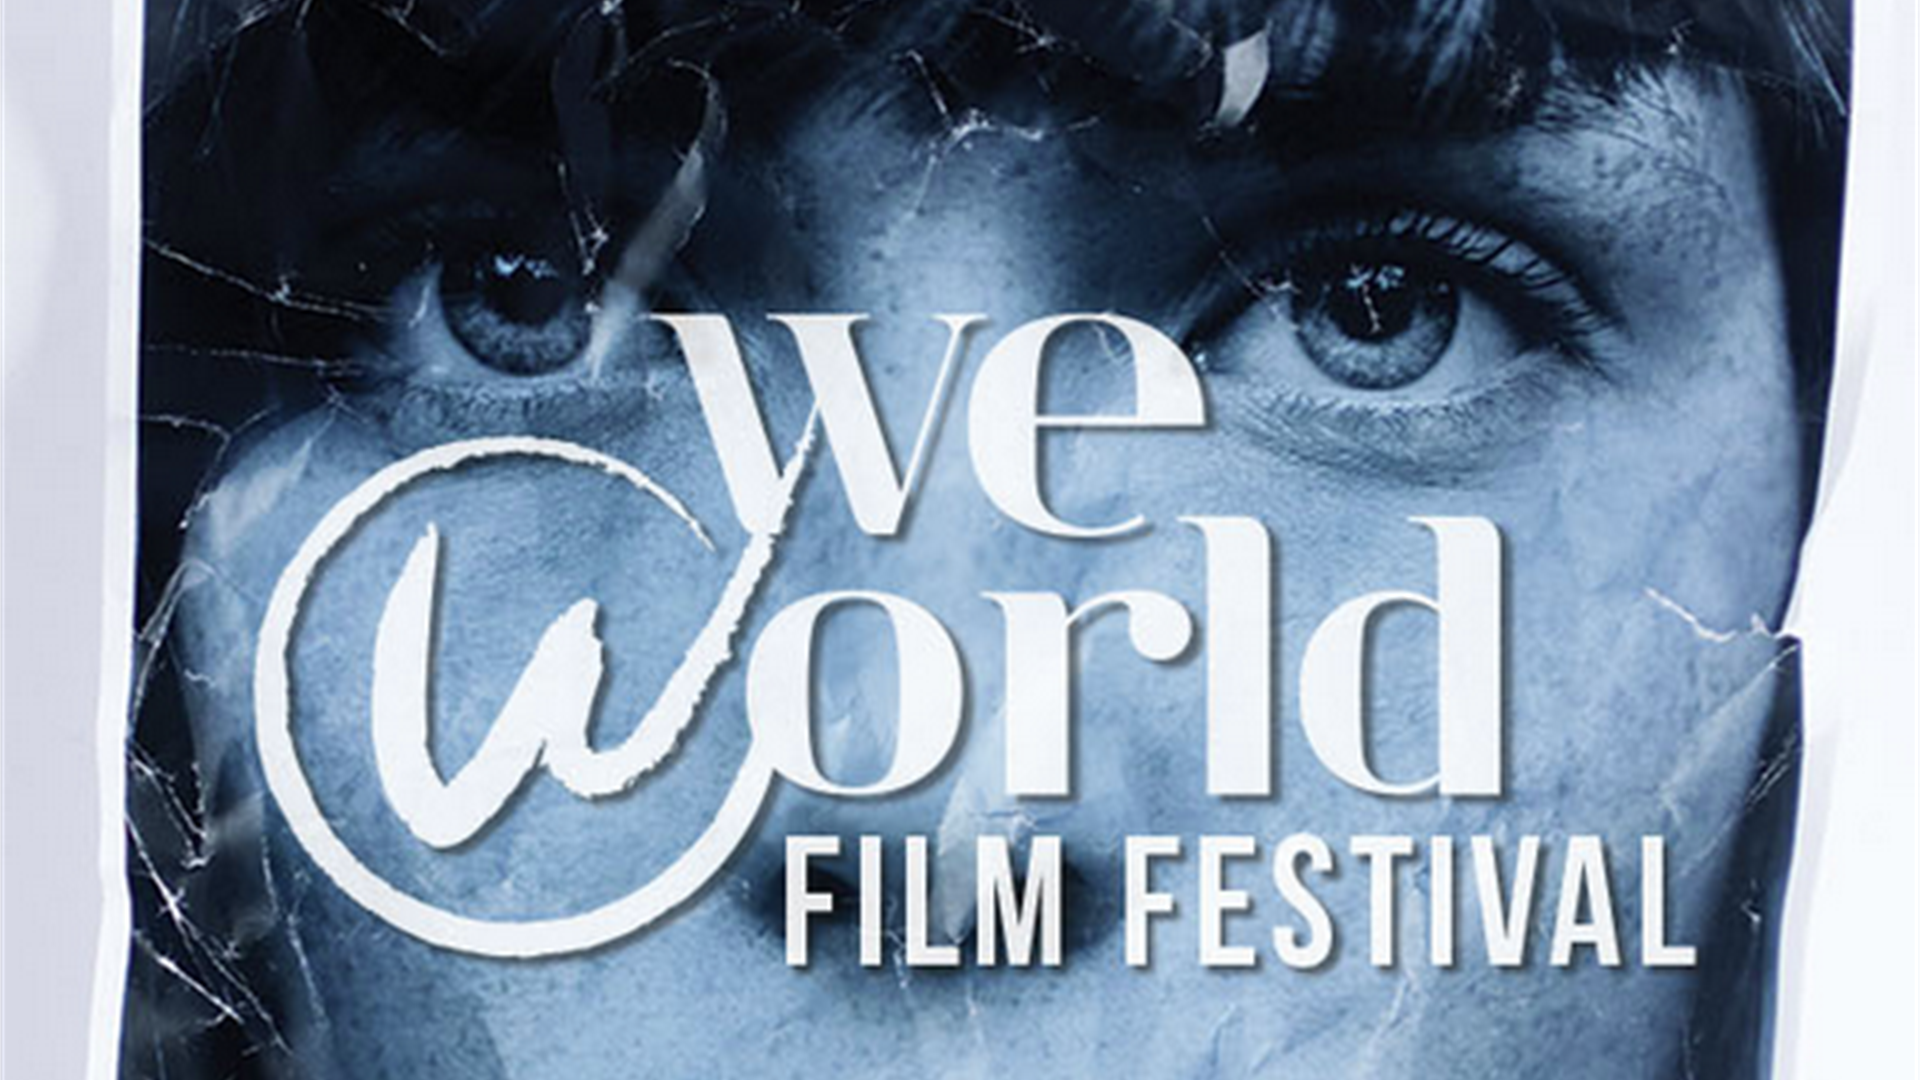 Weworldfilmfestival